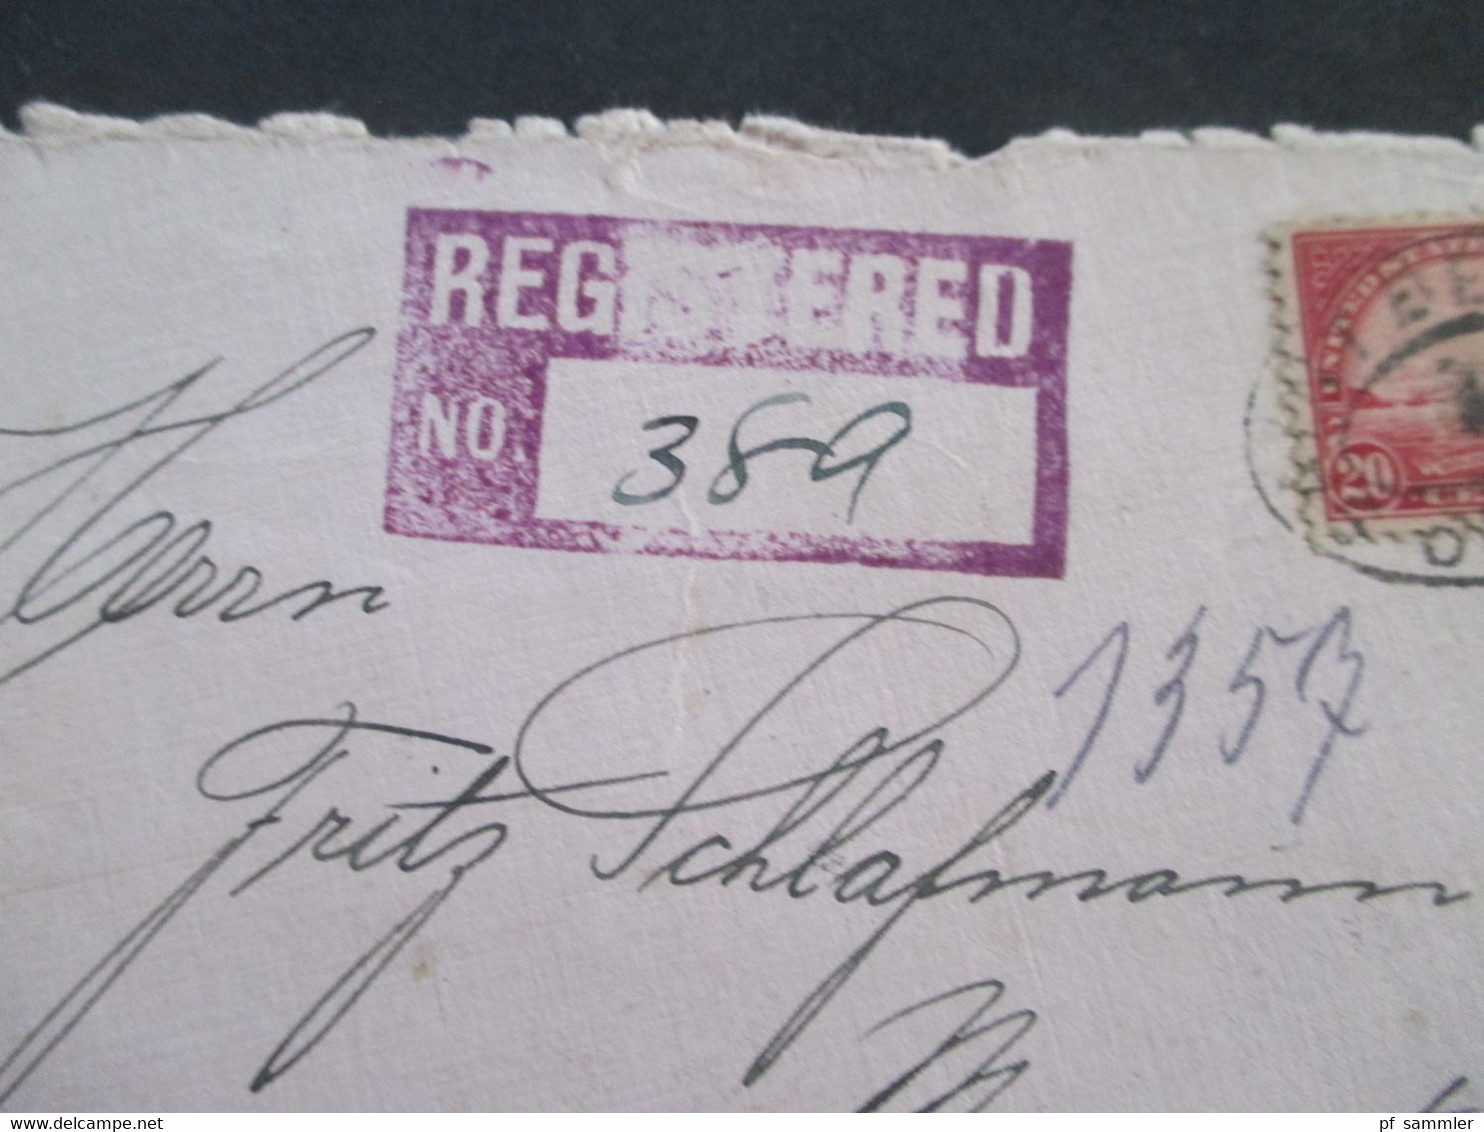 USA 1922 Nr. 279 EF Verwendet 1926 Registered Letter über Cöln Nach Pirmasens Rückseitig 7 Stempel SST Pirmasens - Storia Postale